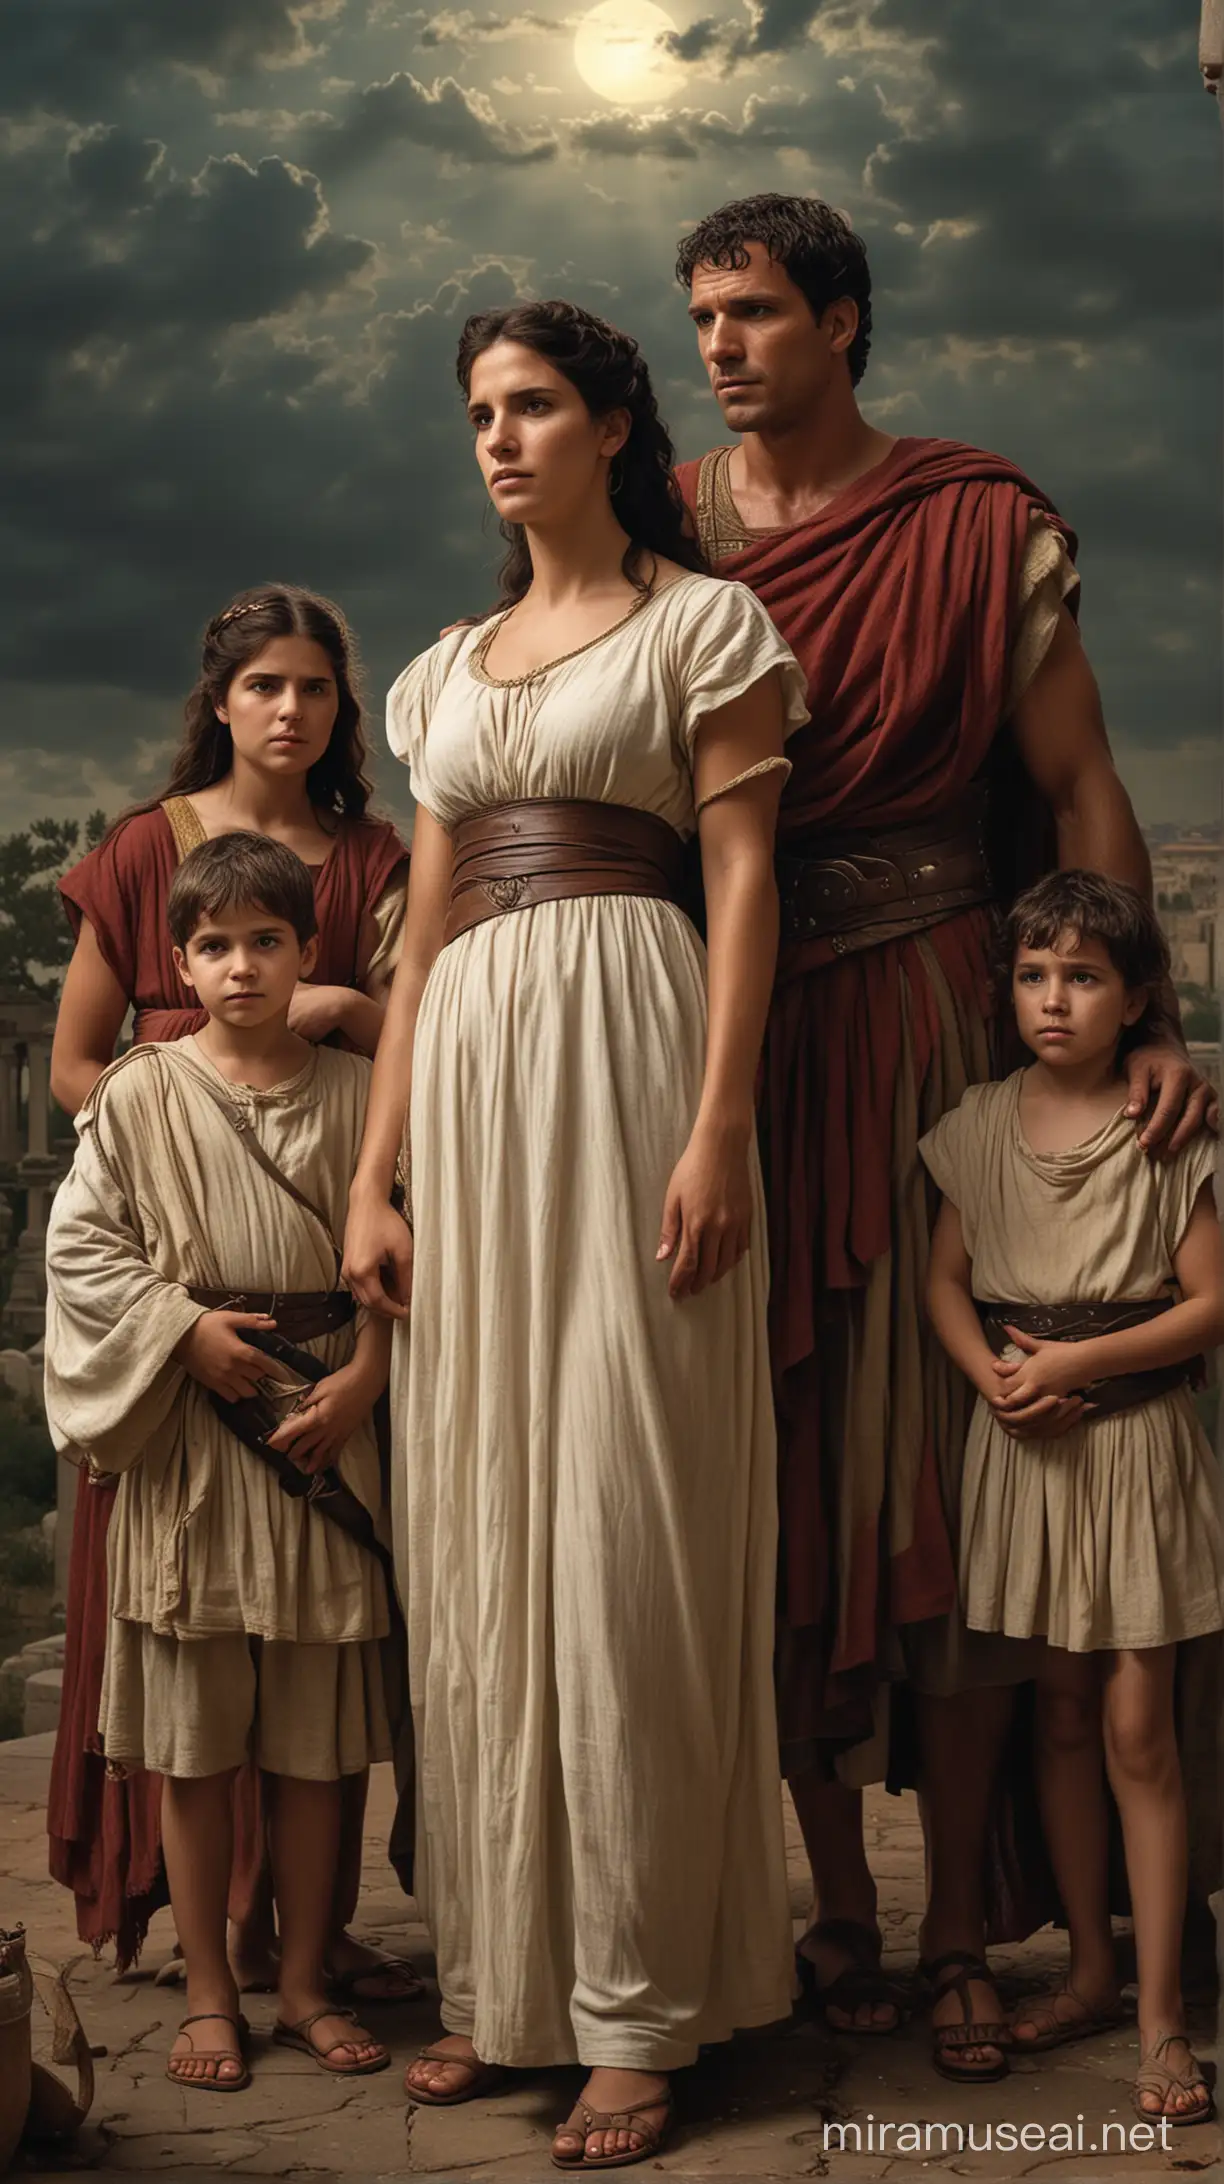 Mark Antony and Octavia with Three Children in Moody Setting